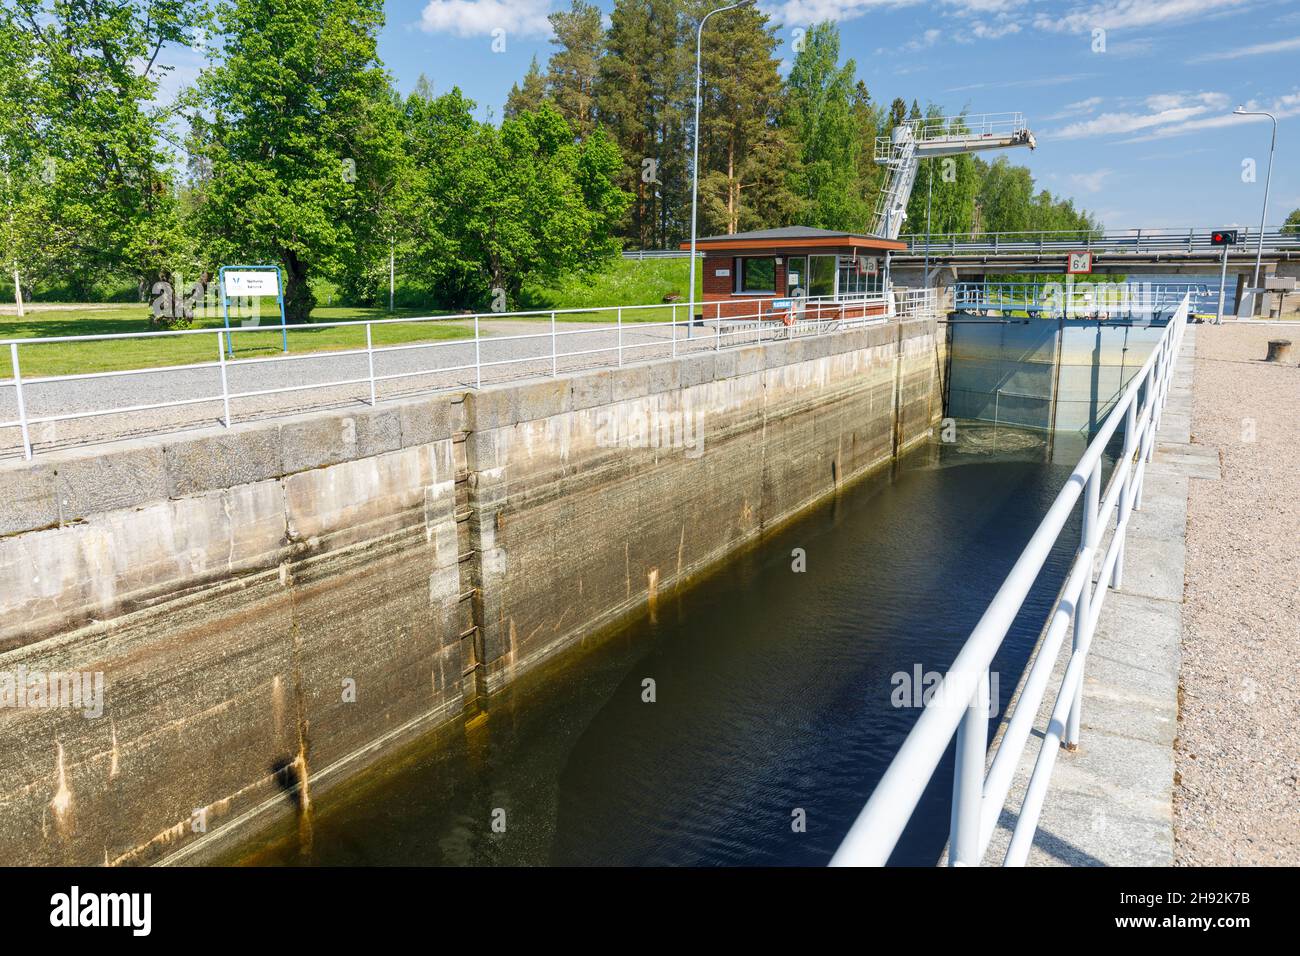 Neiturin kanava canal sluice . Canal connects lake Pohjois-Konnevesi and Keitele , Finland Stock Photo